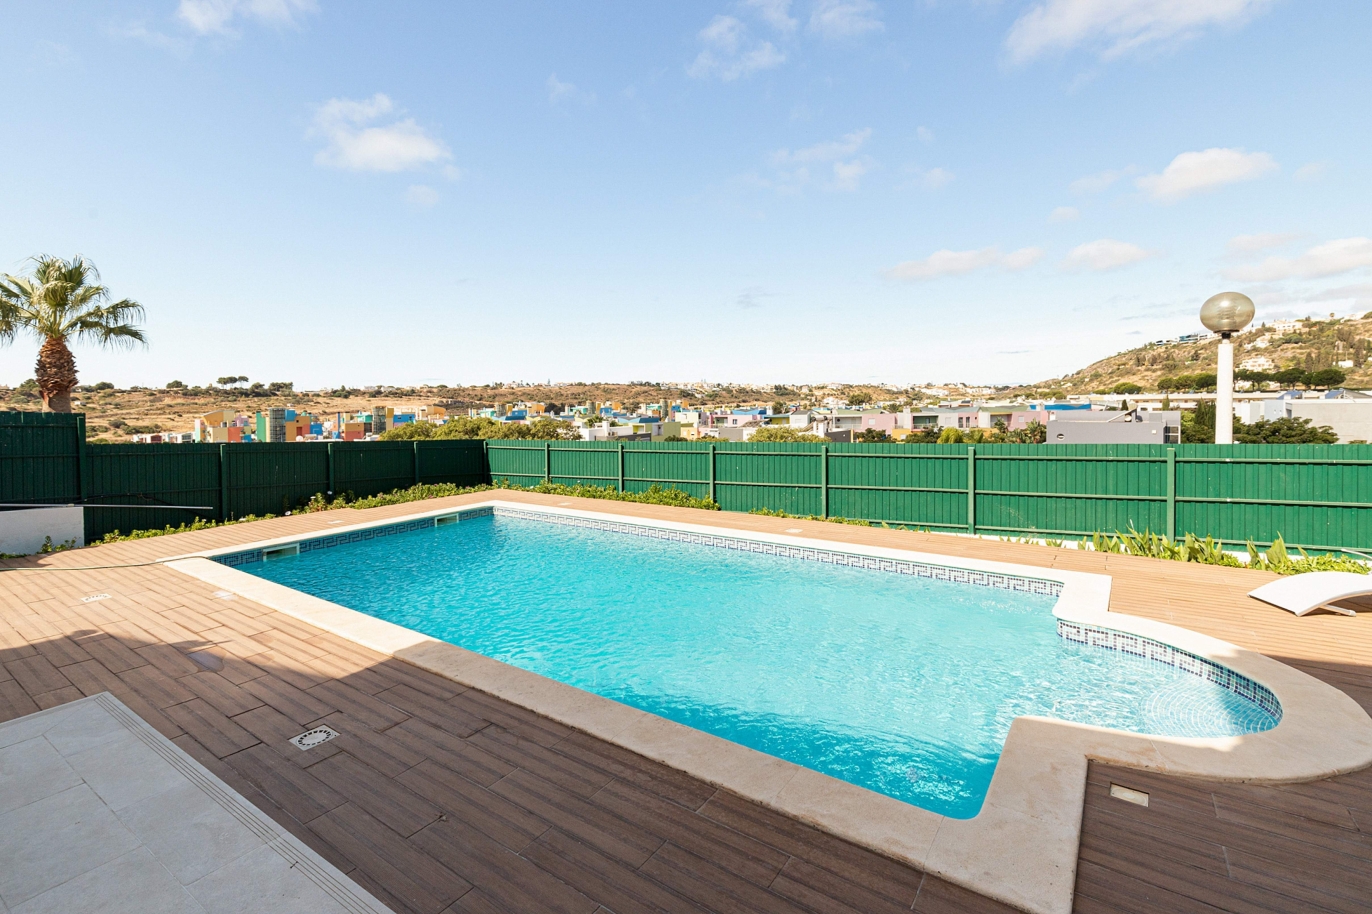 3 bedroom villa with swimming pool and garden, Albufeira, Algarve_177048